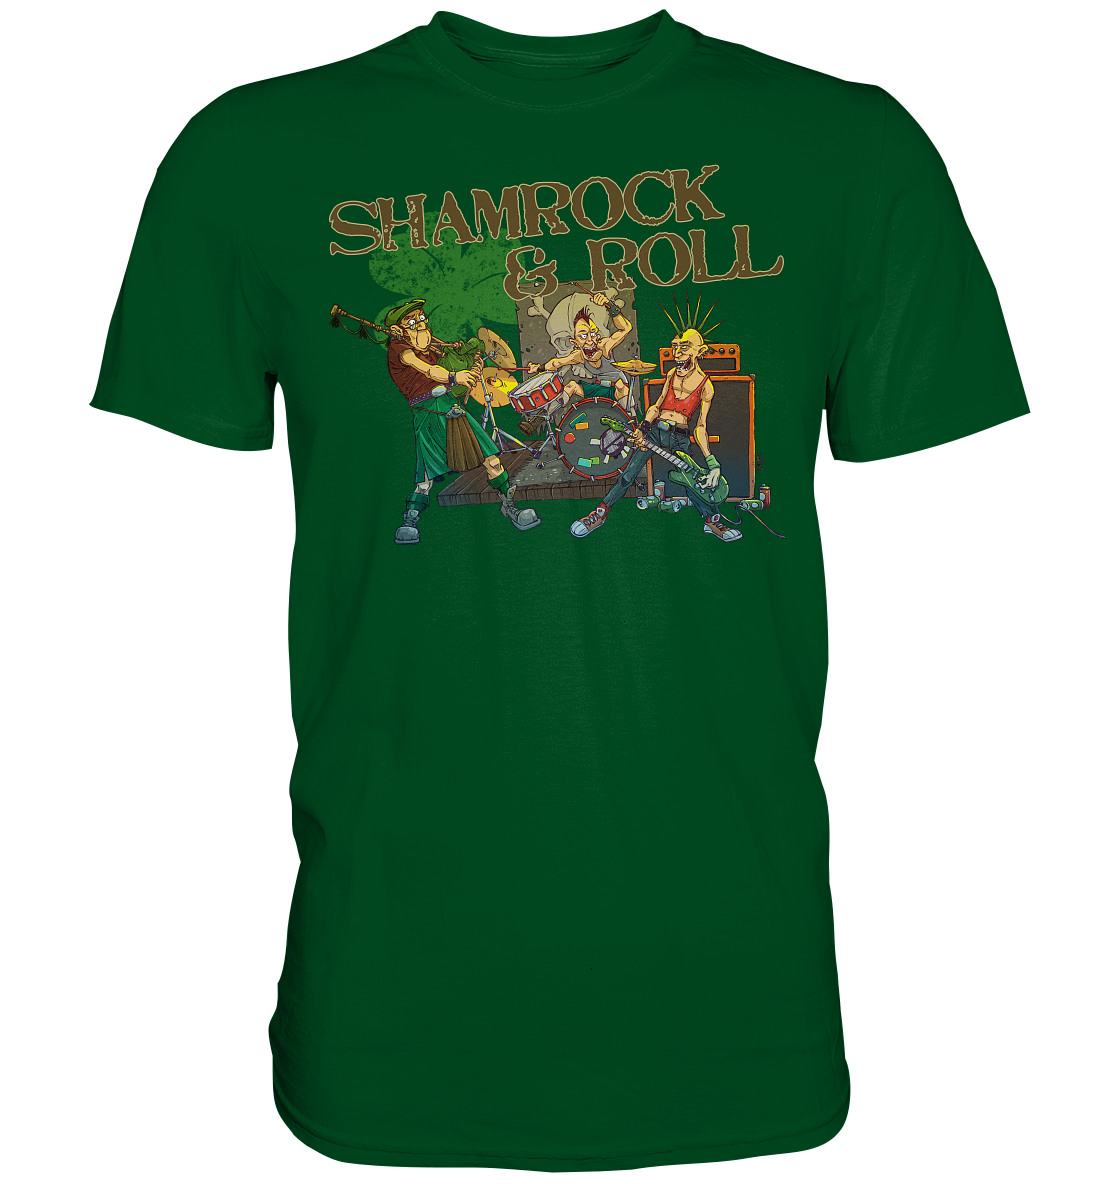 Shamrock & Roll "Band" - Premium Shirt